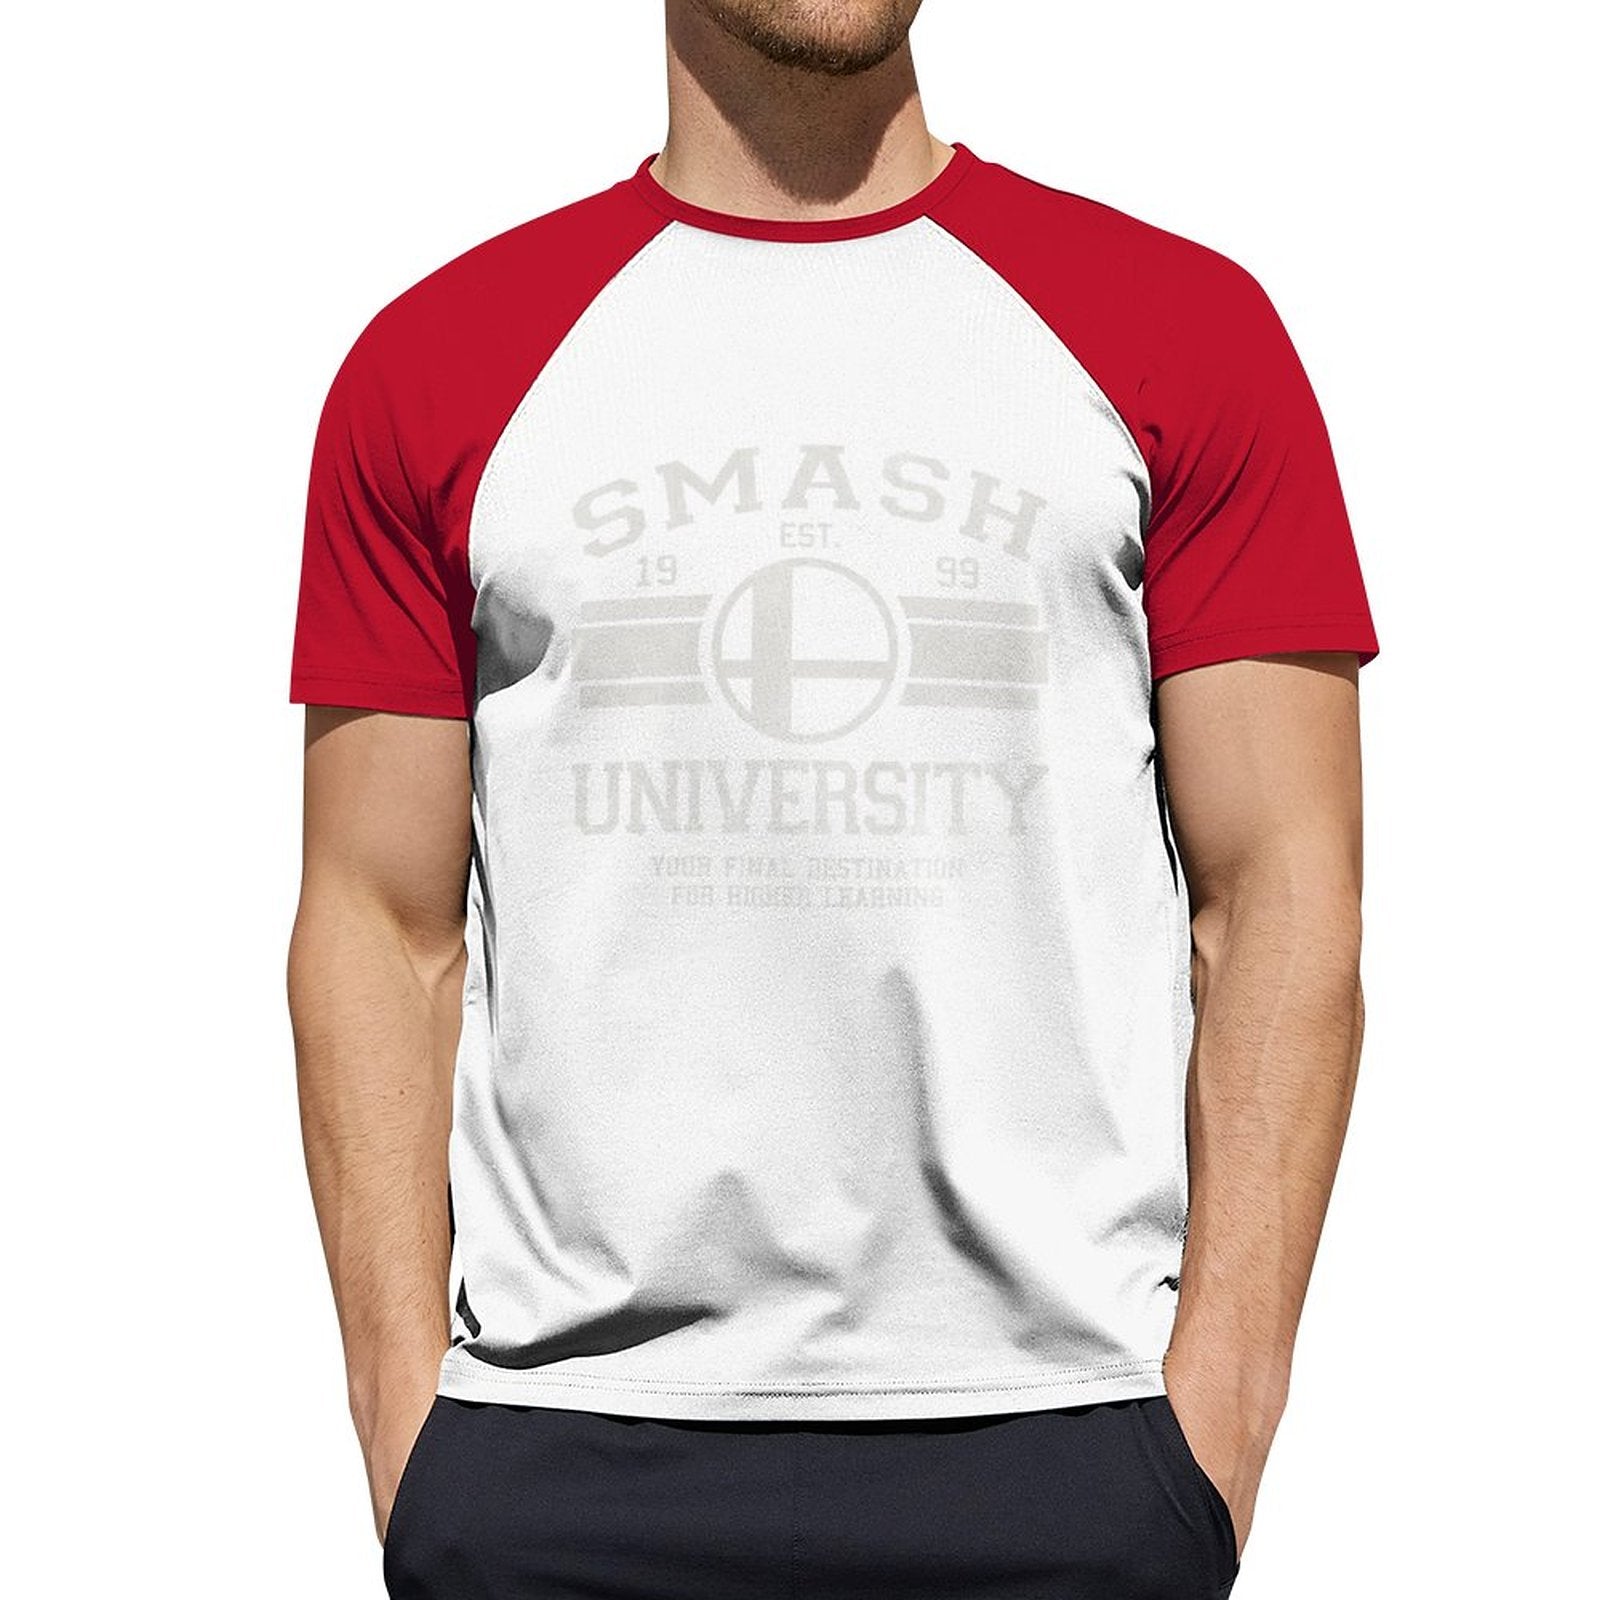 Super Smash Brothers University T Shirt (3 color styles)